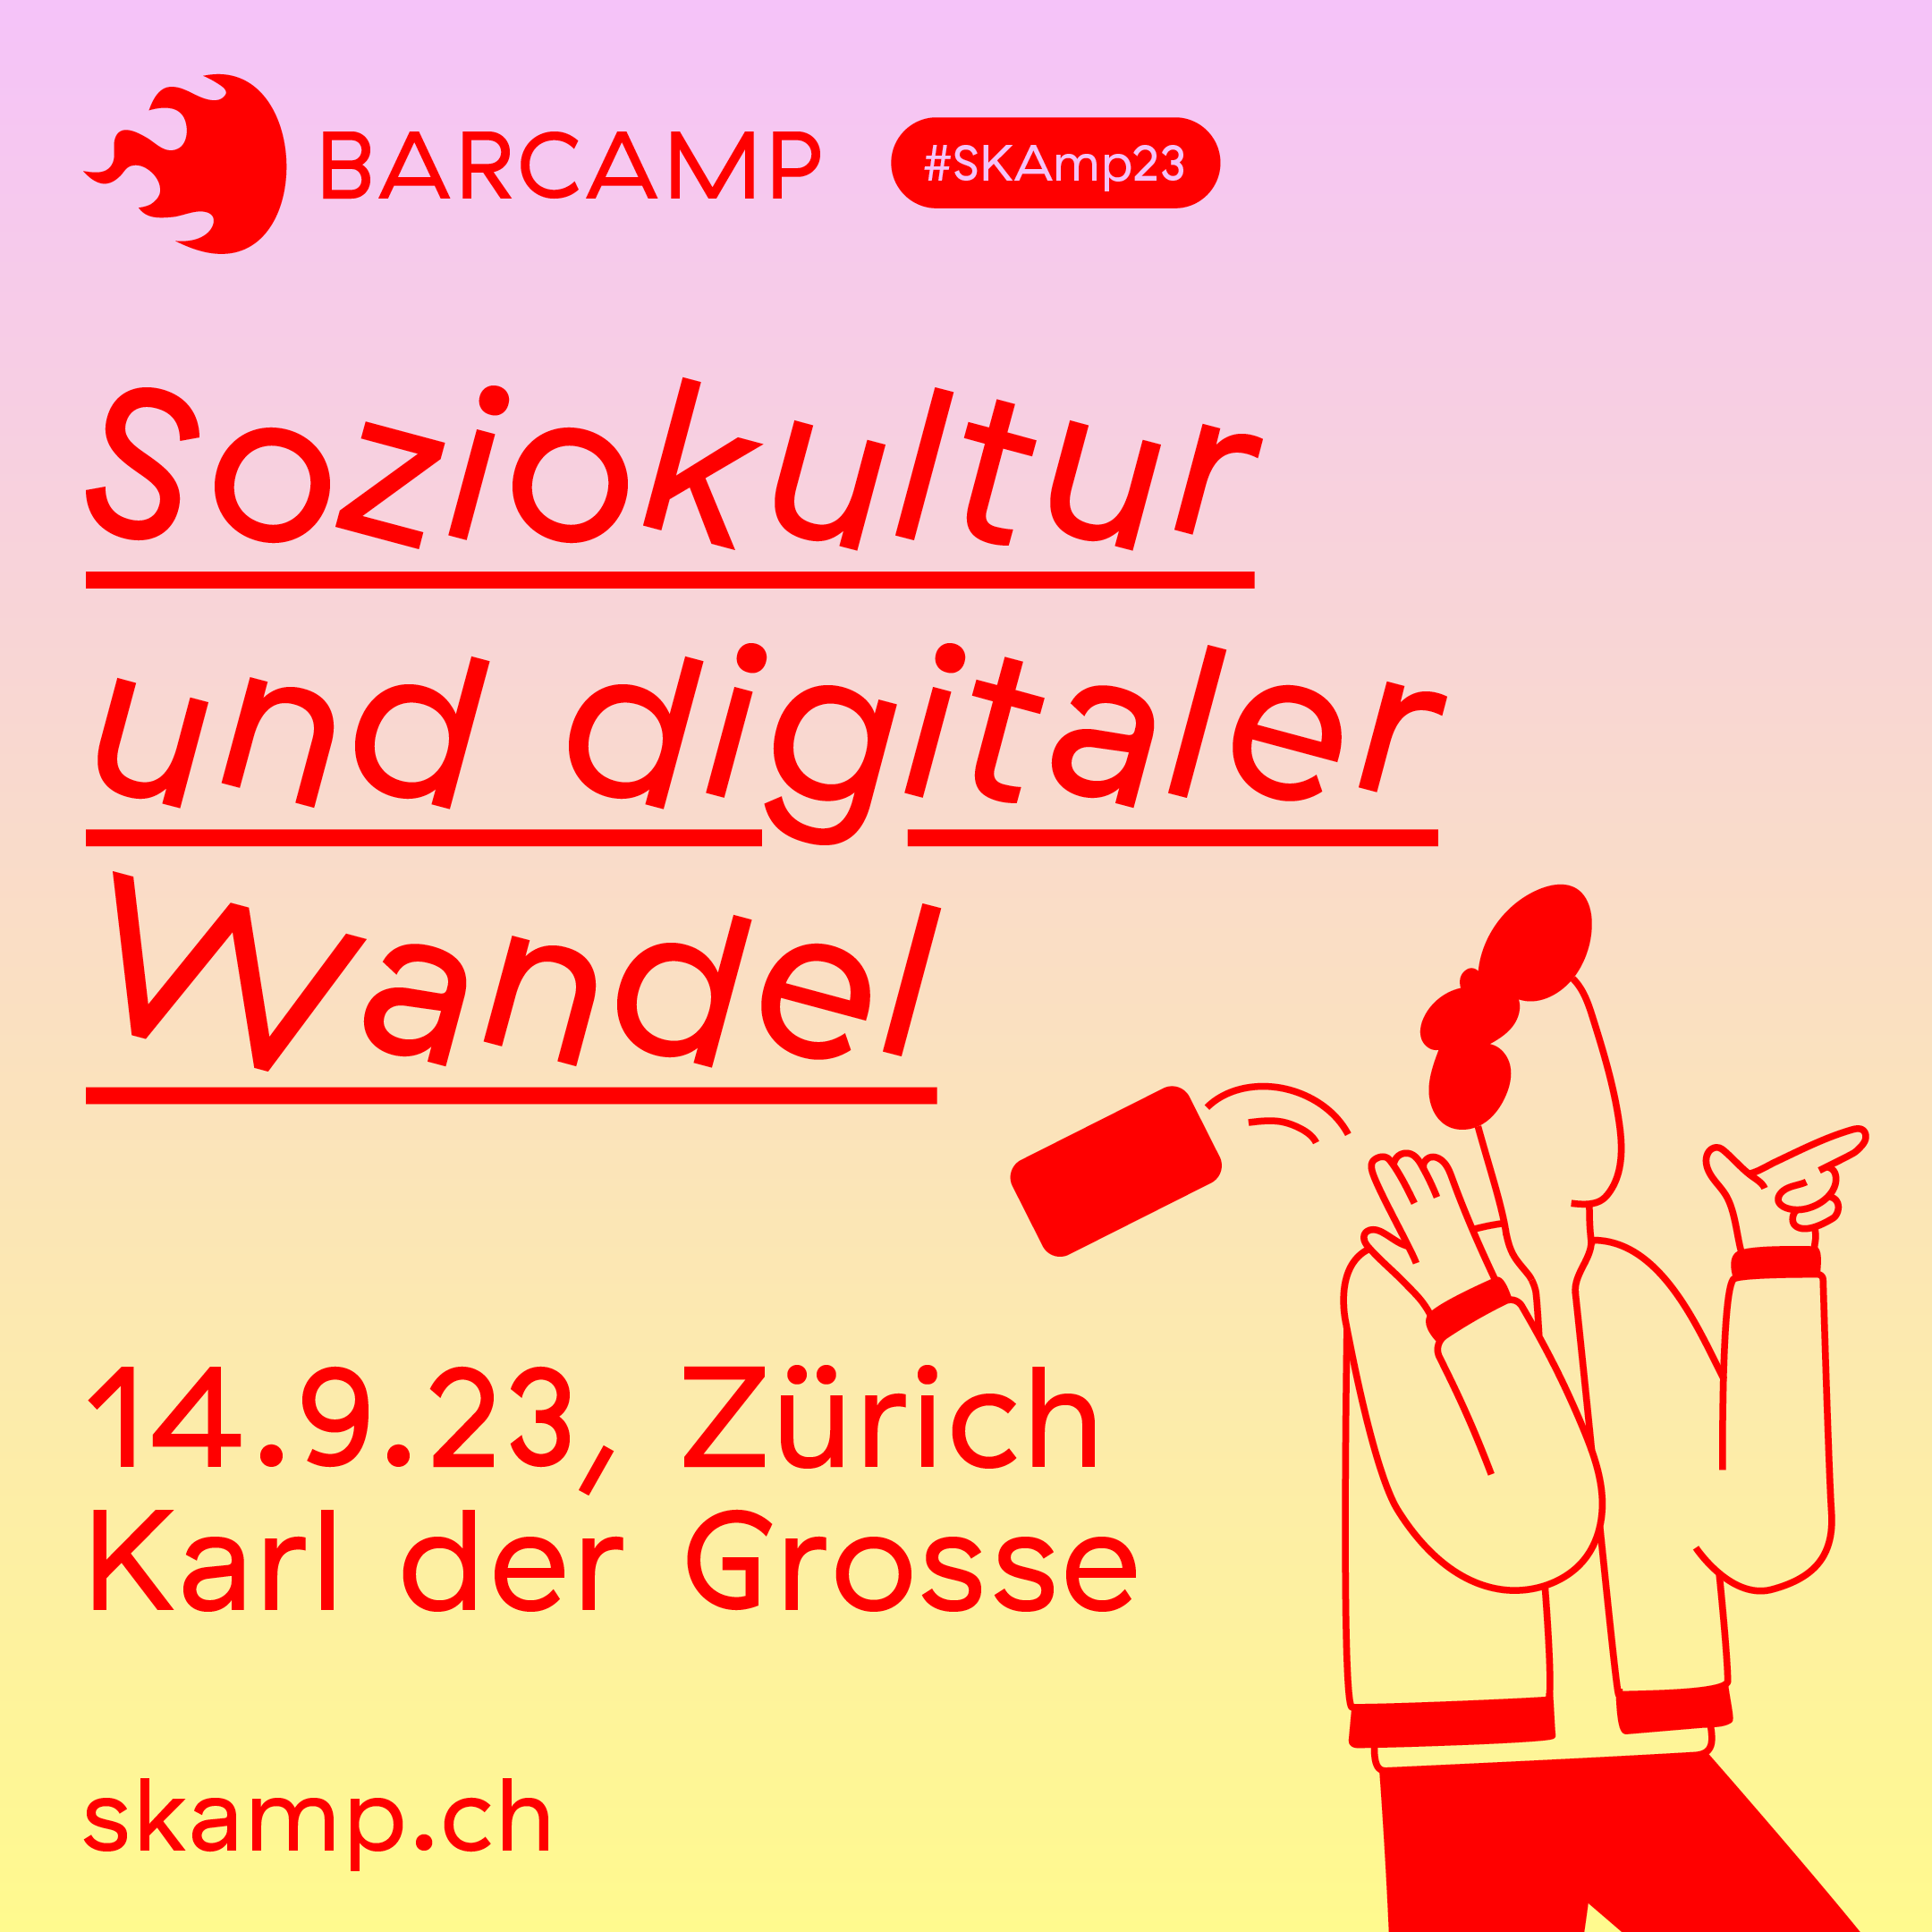 #SKAmp23 – Barcamp Soziokultur und digitaler Wandel